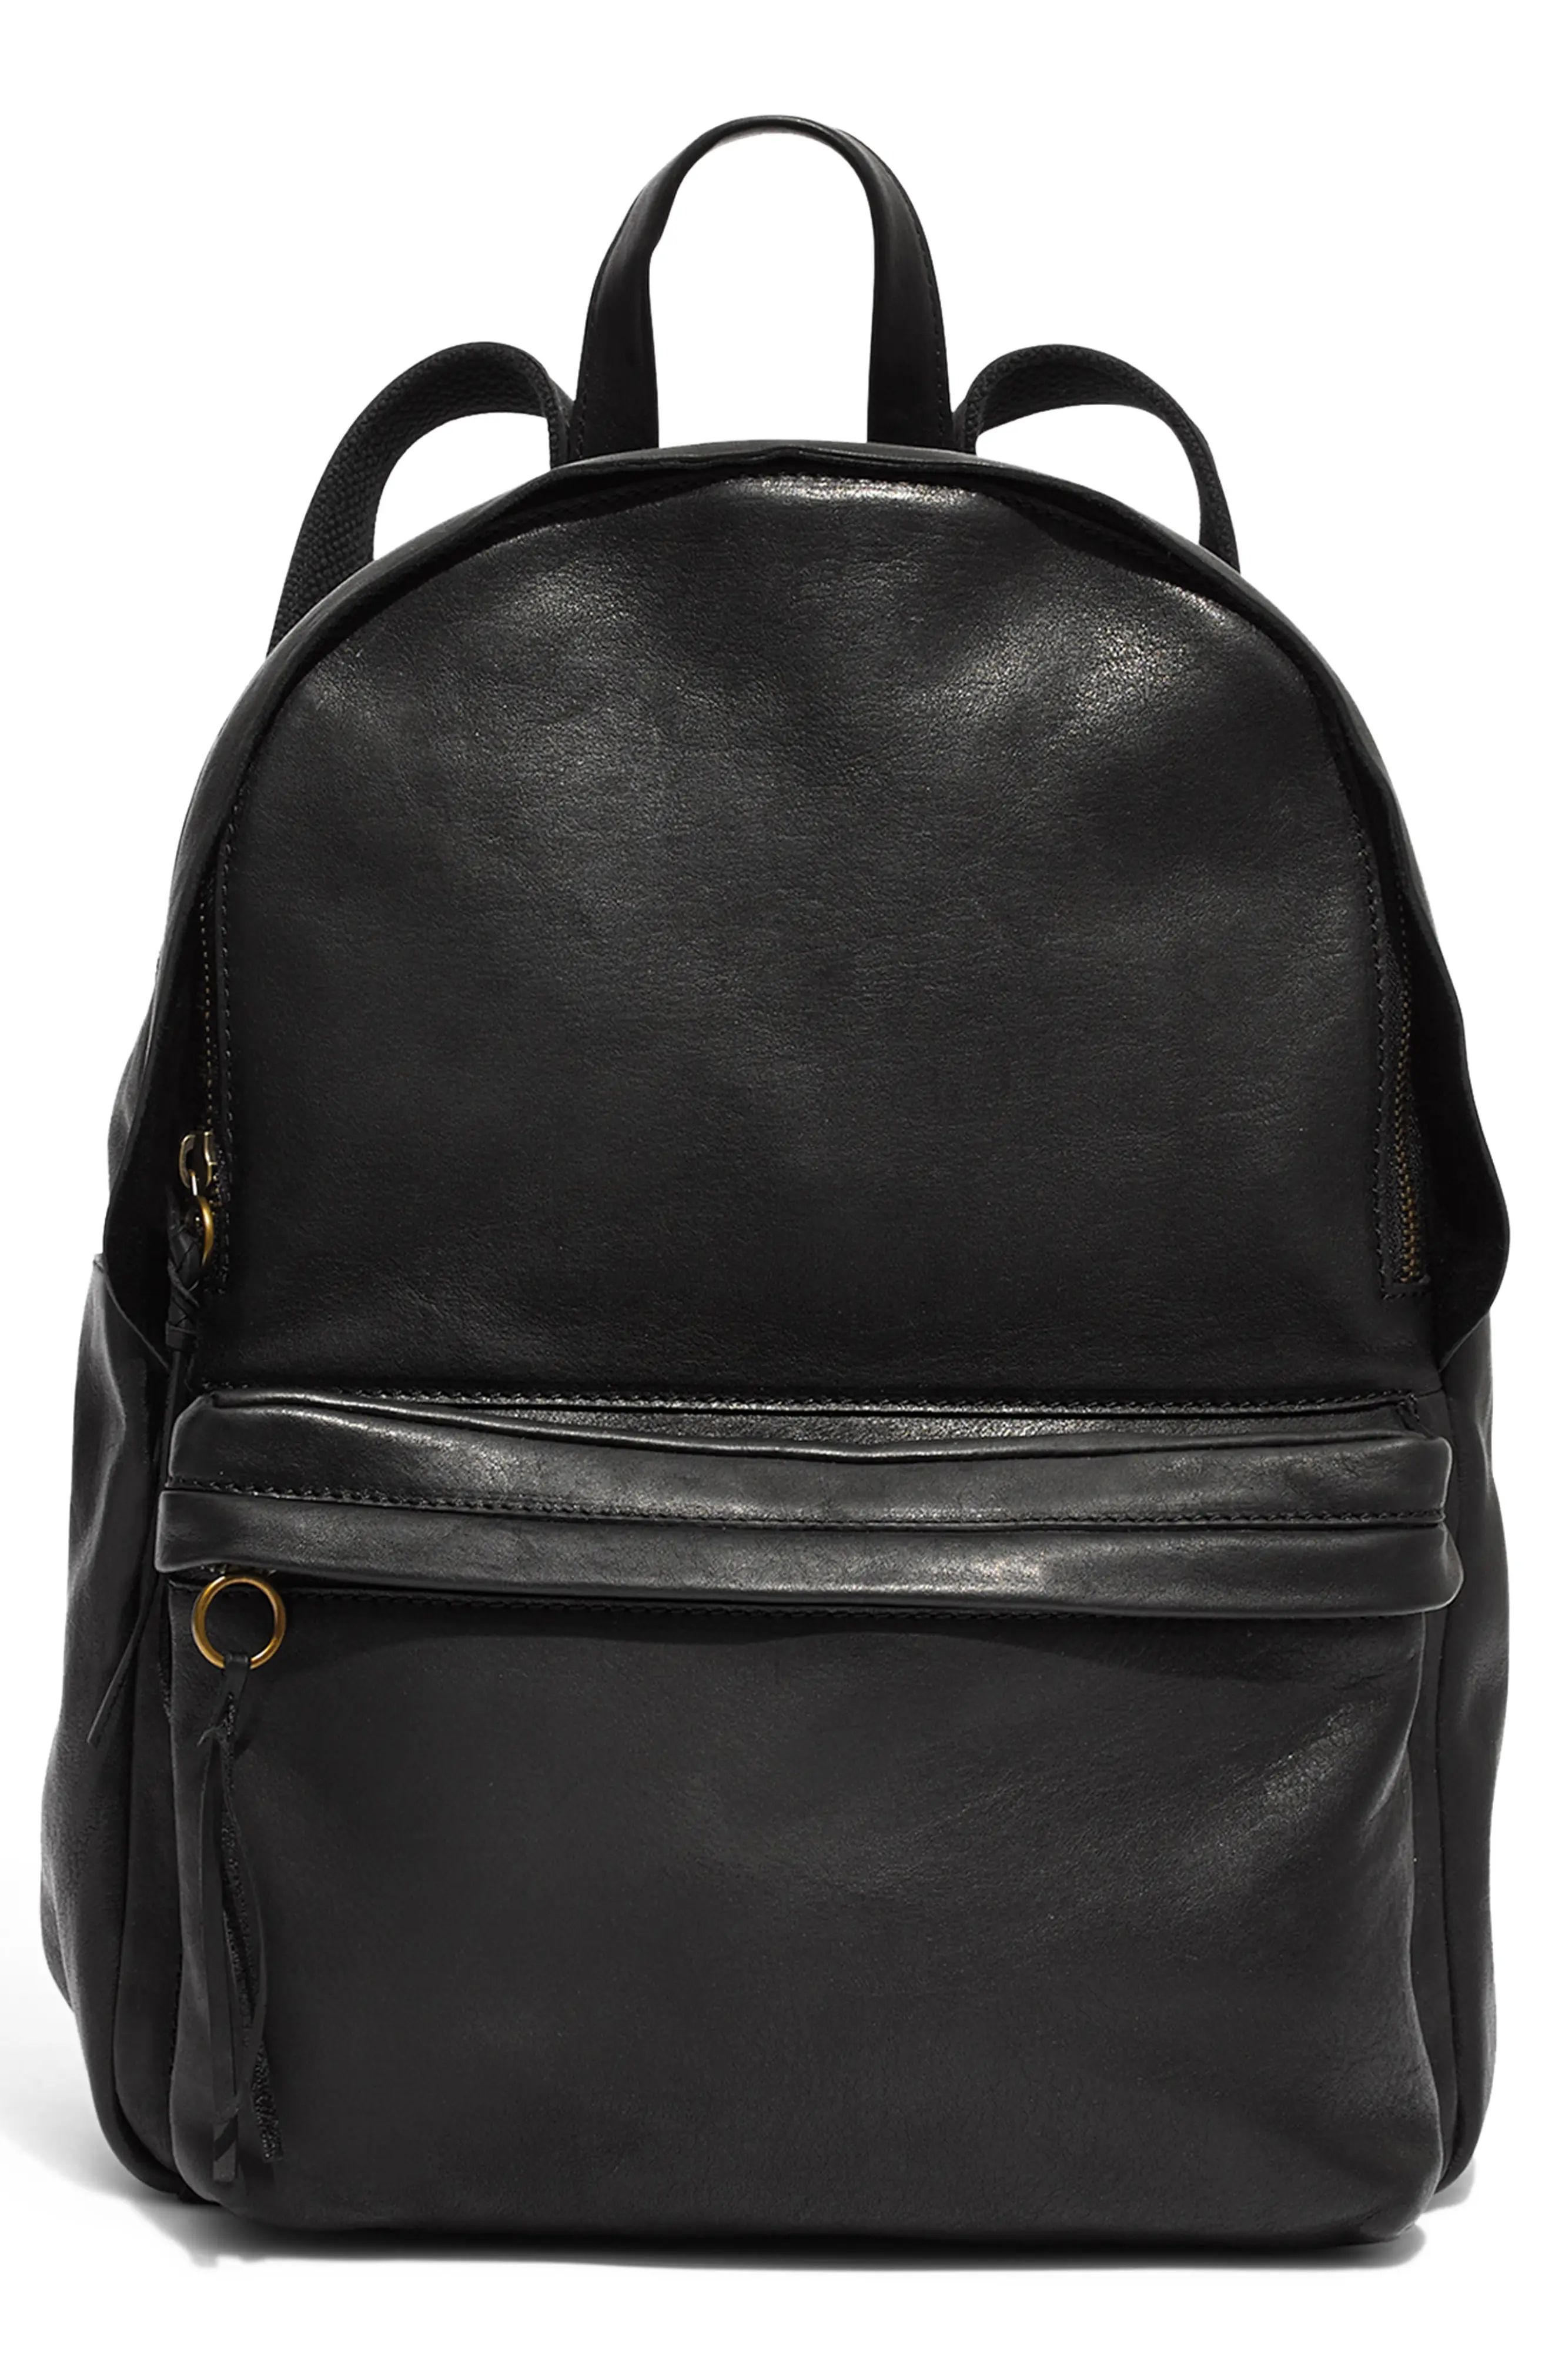 Madewell Lorimer Leather Backpack | Nordstrom